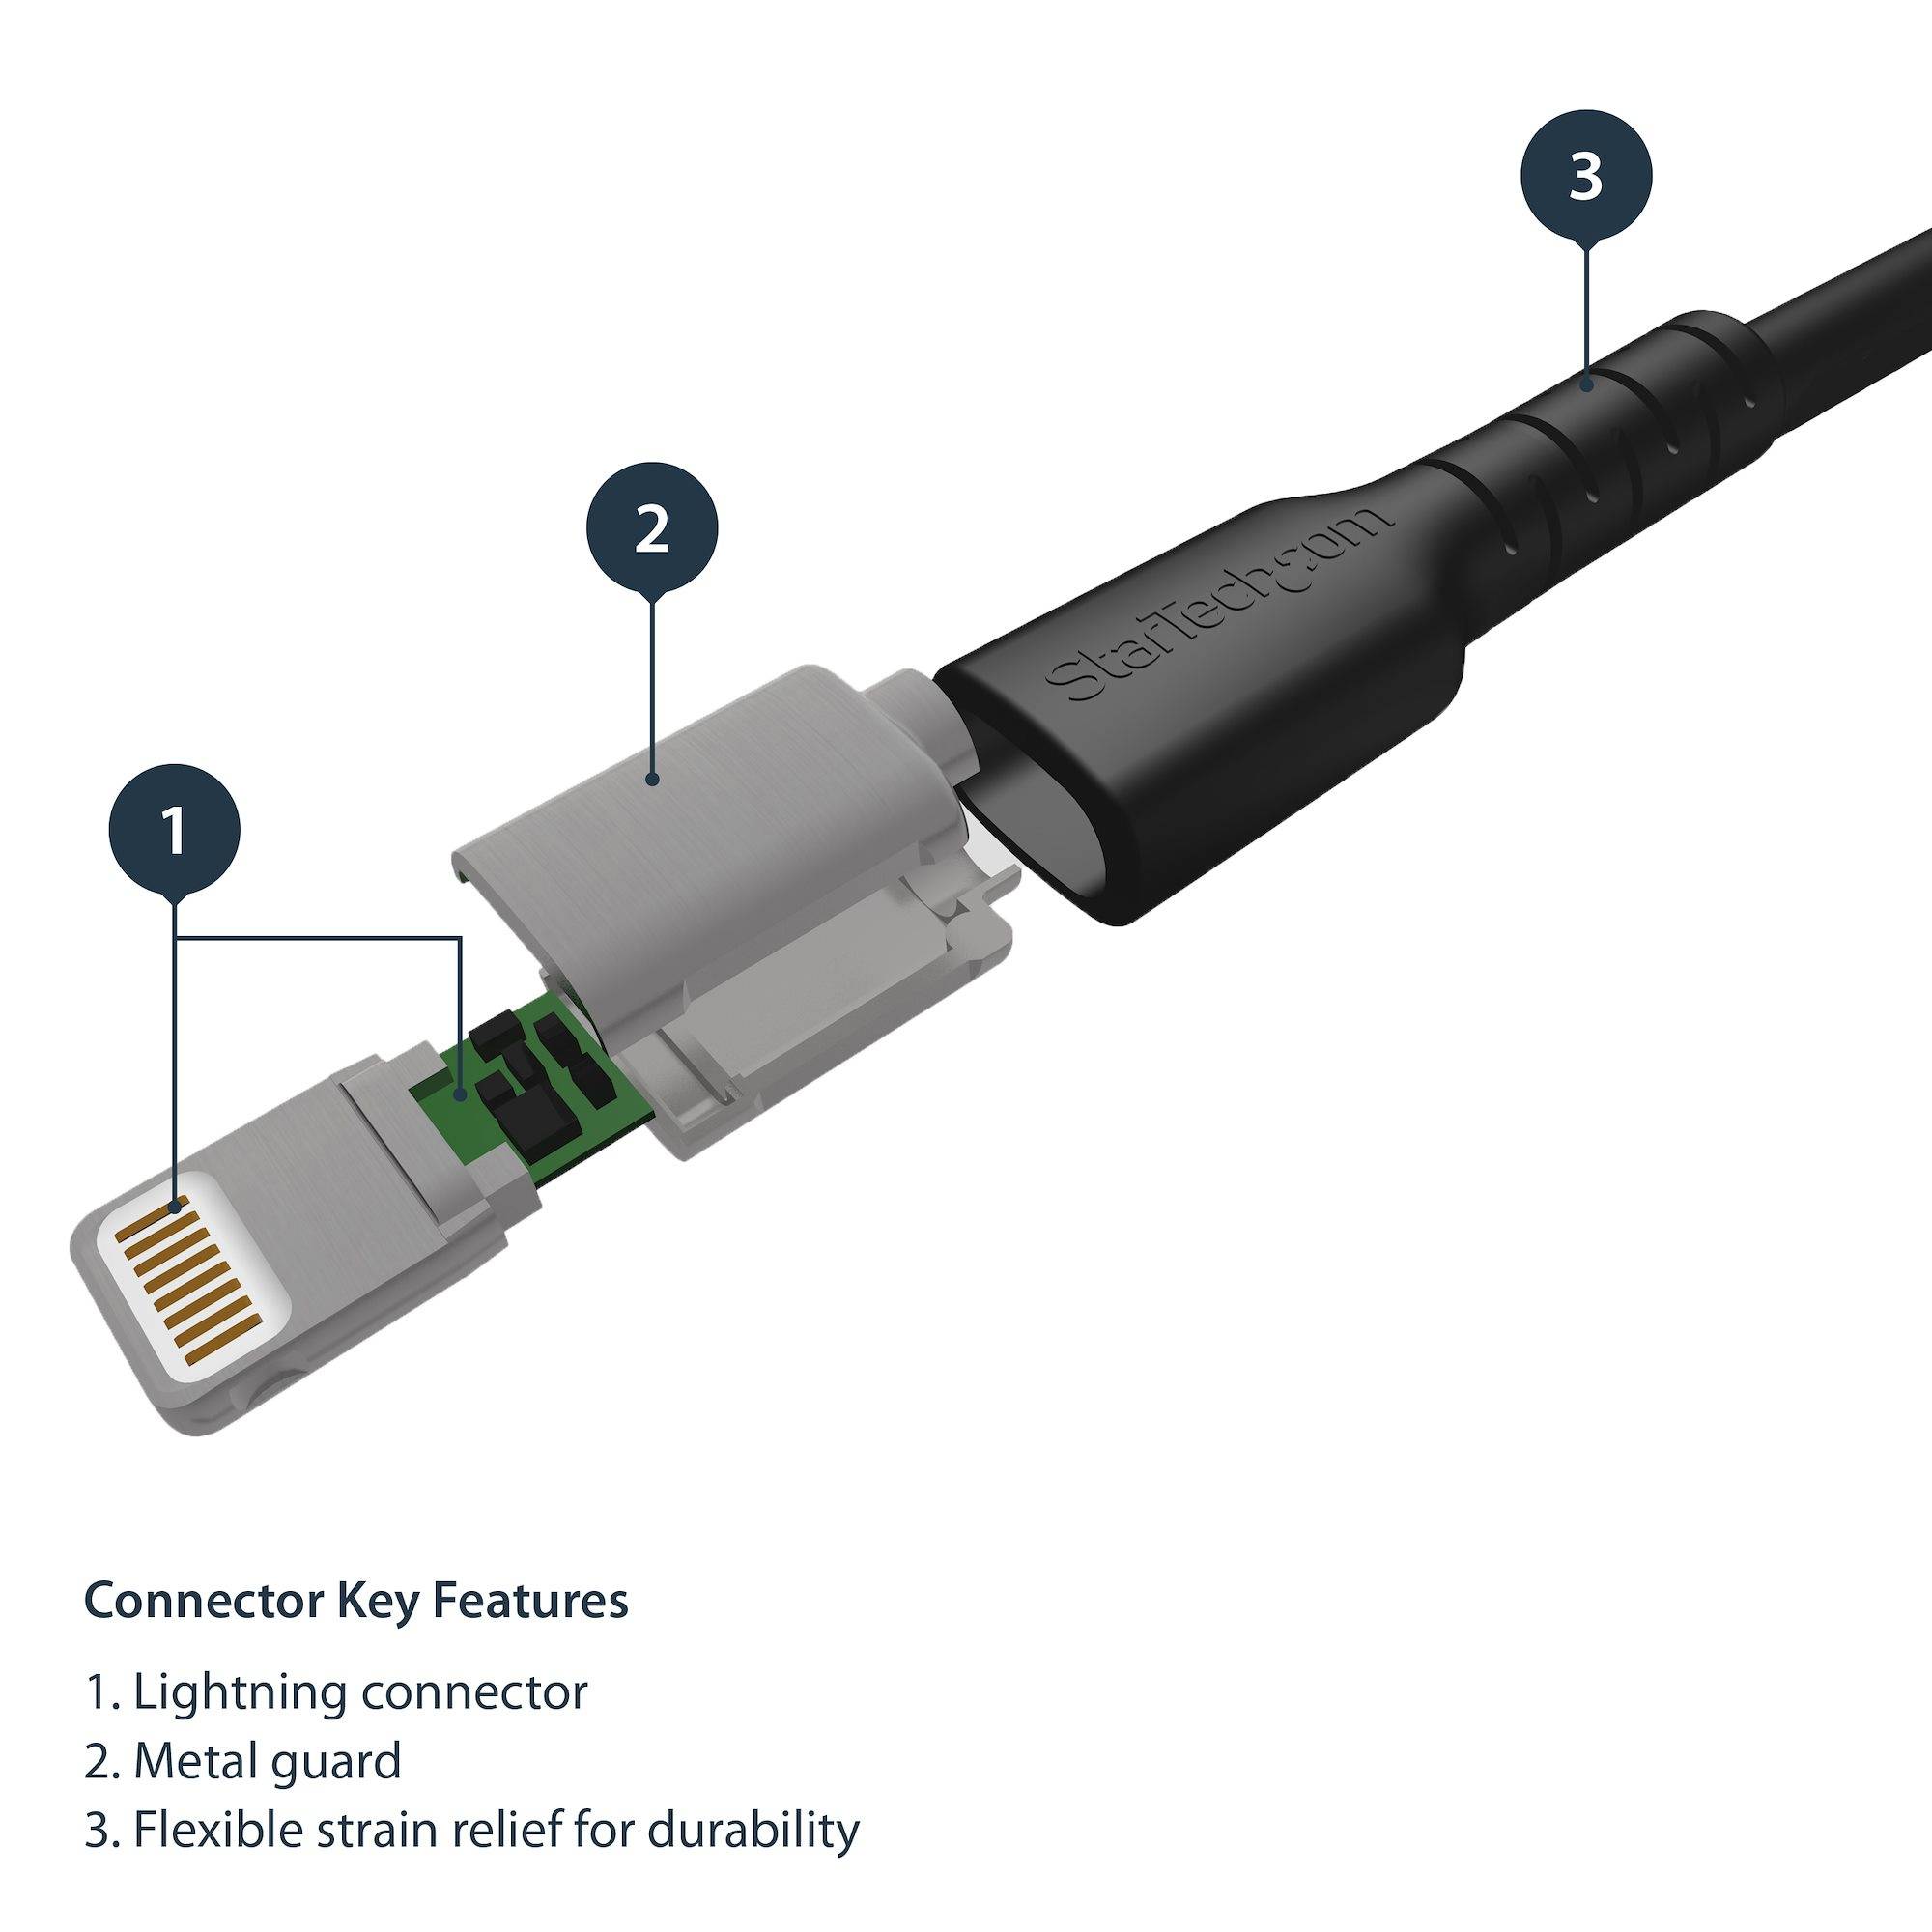 Rca Informatique - image du produit : 2M USB TO LIGHTNING CABLE APPLE MFI CRTIFIED DUPONT KEVLAR